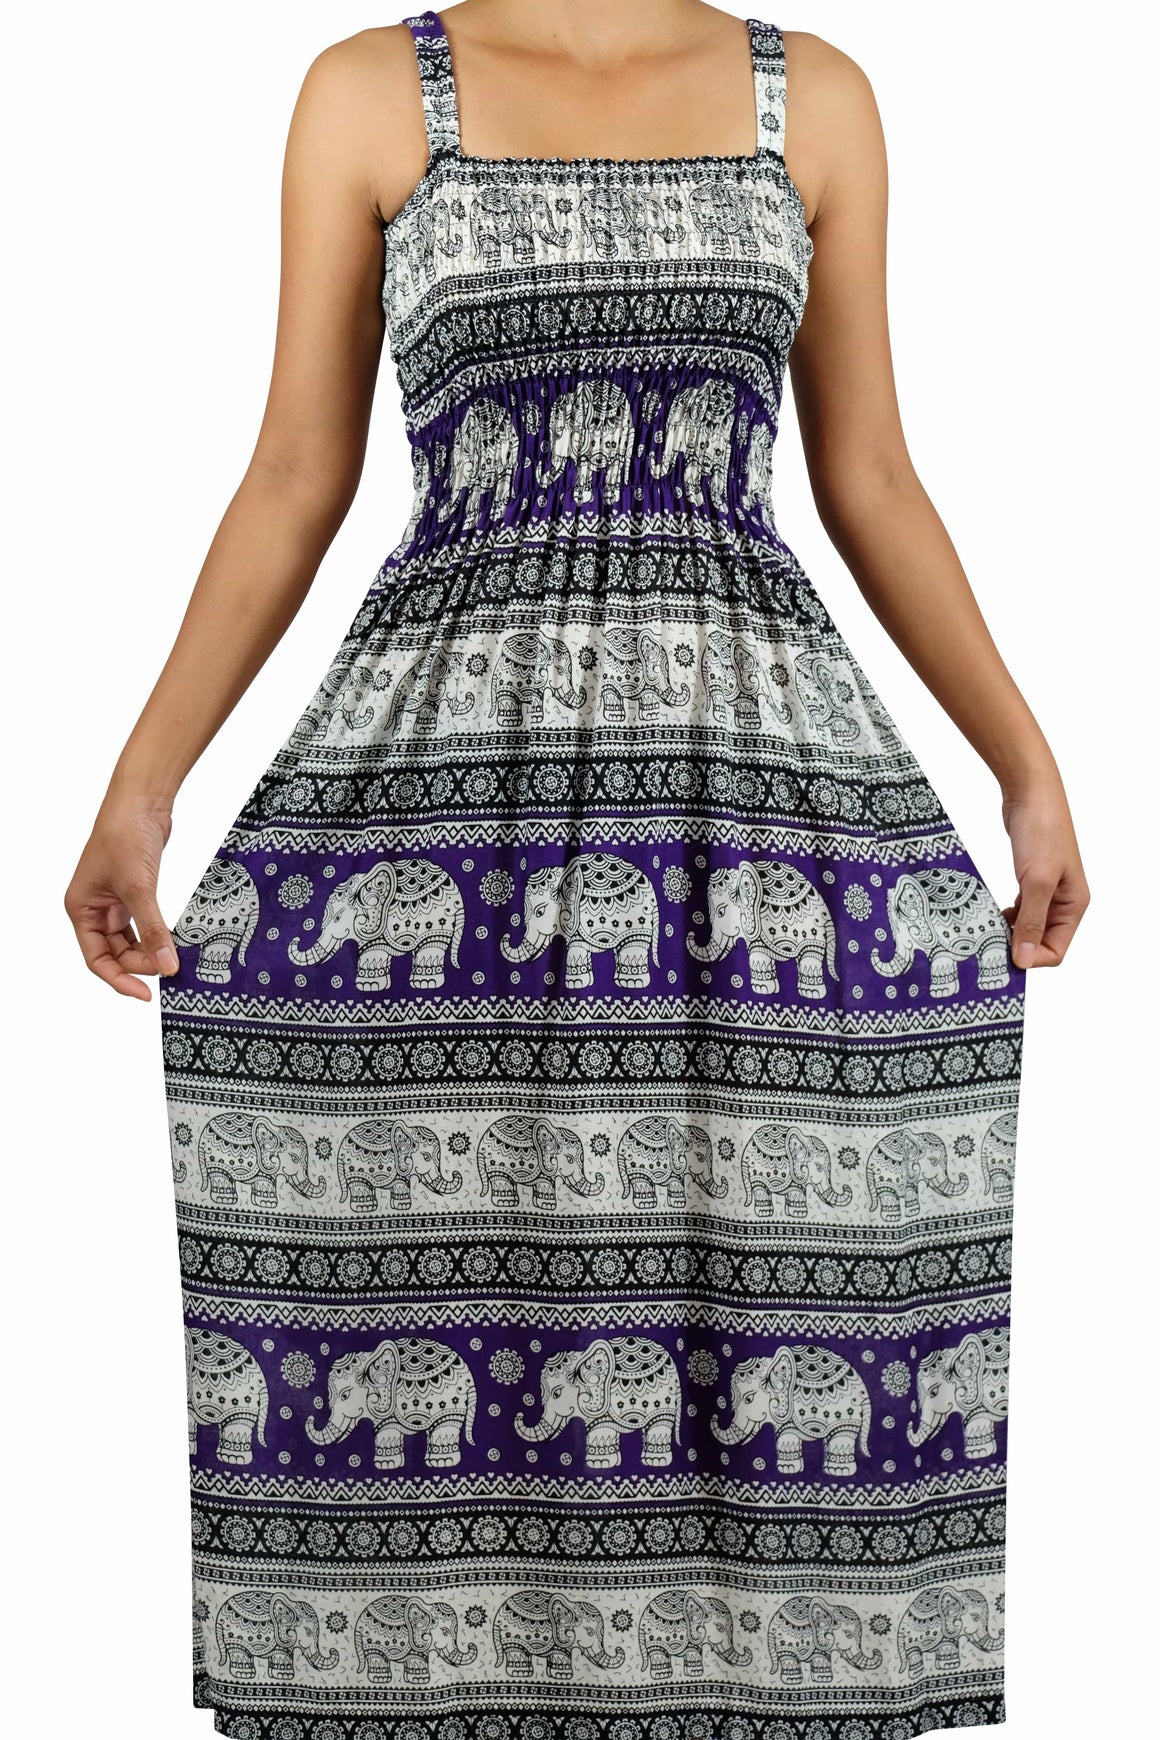 Elephant Shirt Store Dress Chang Phun Elephant Dress White and Purple